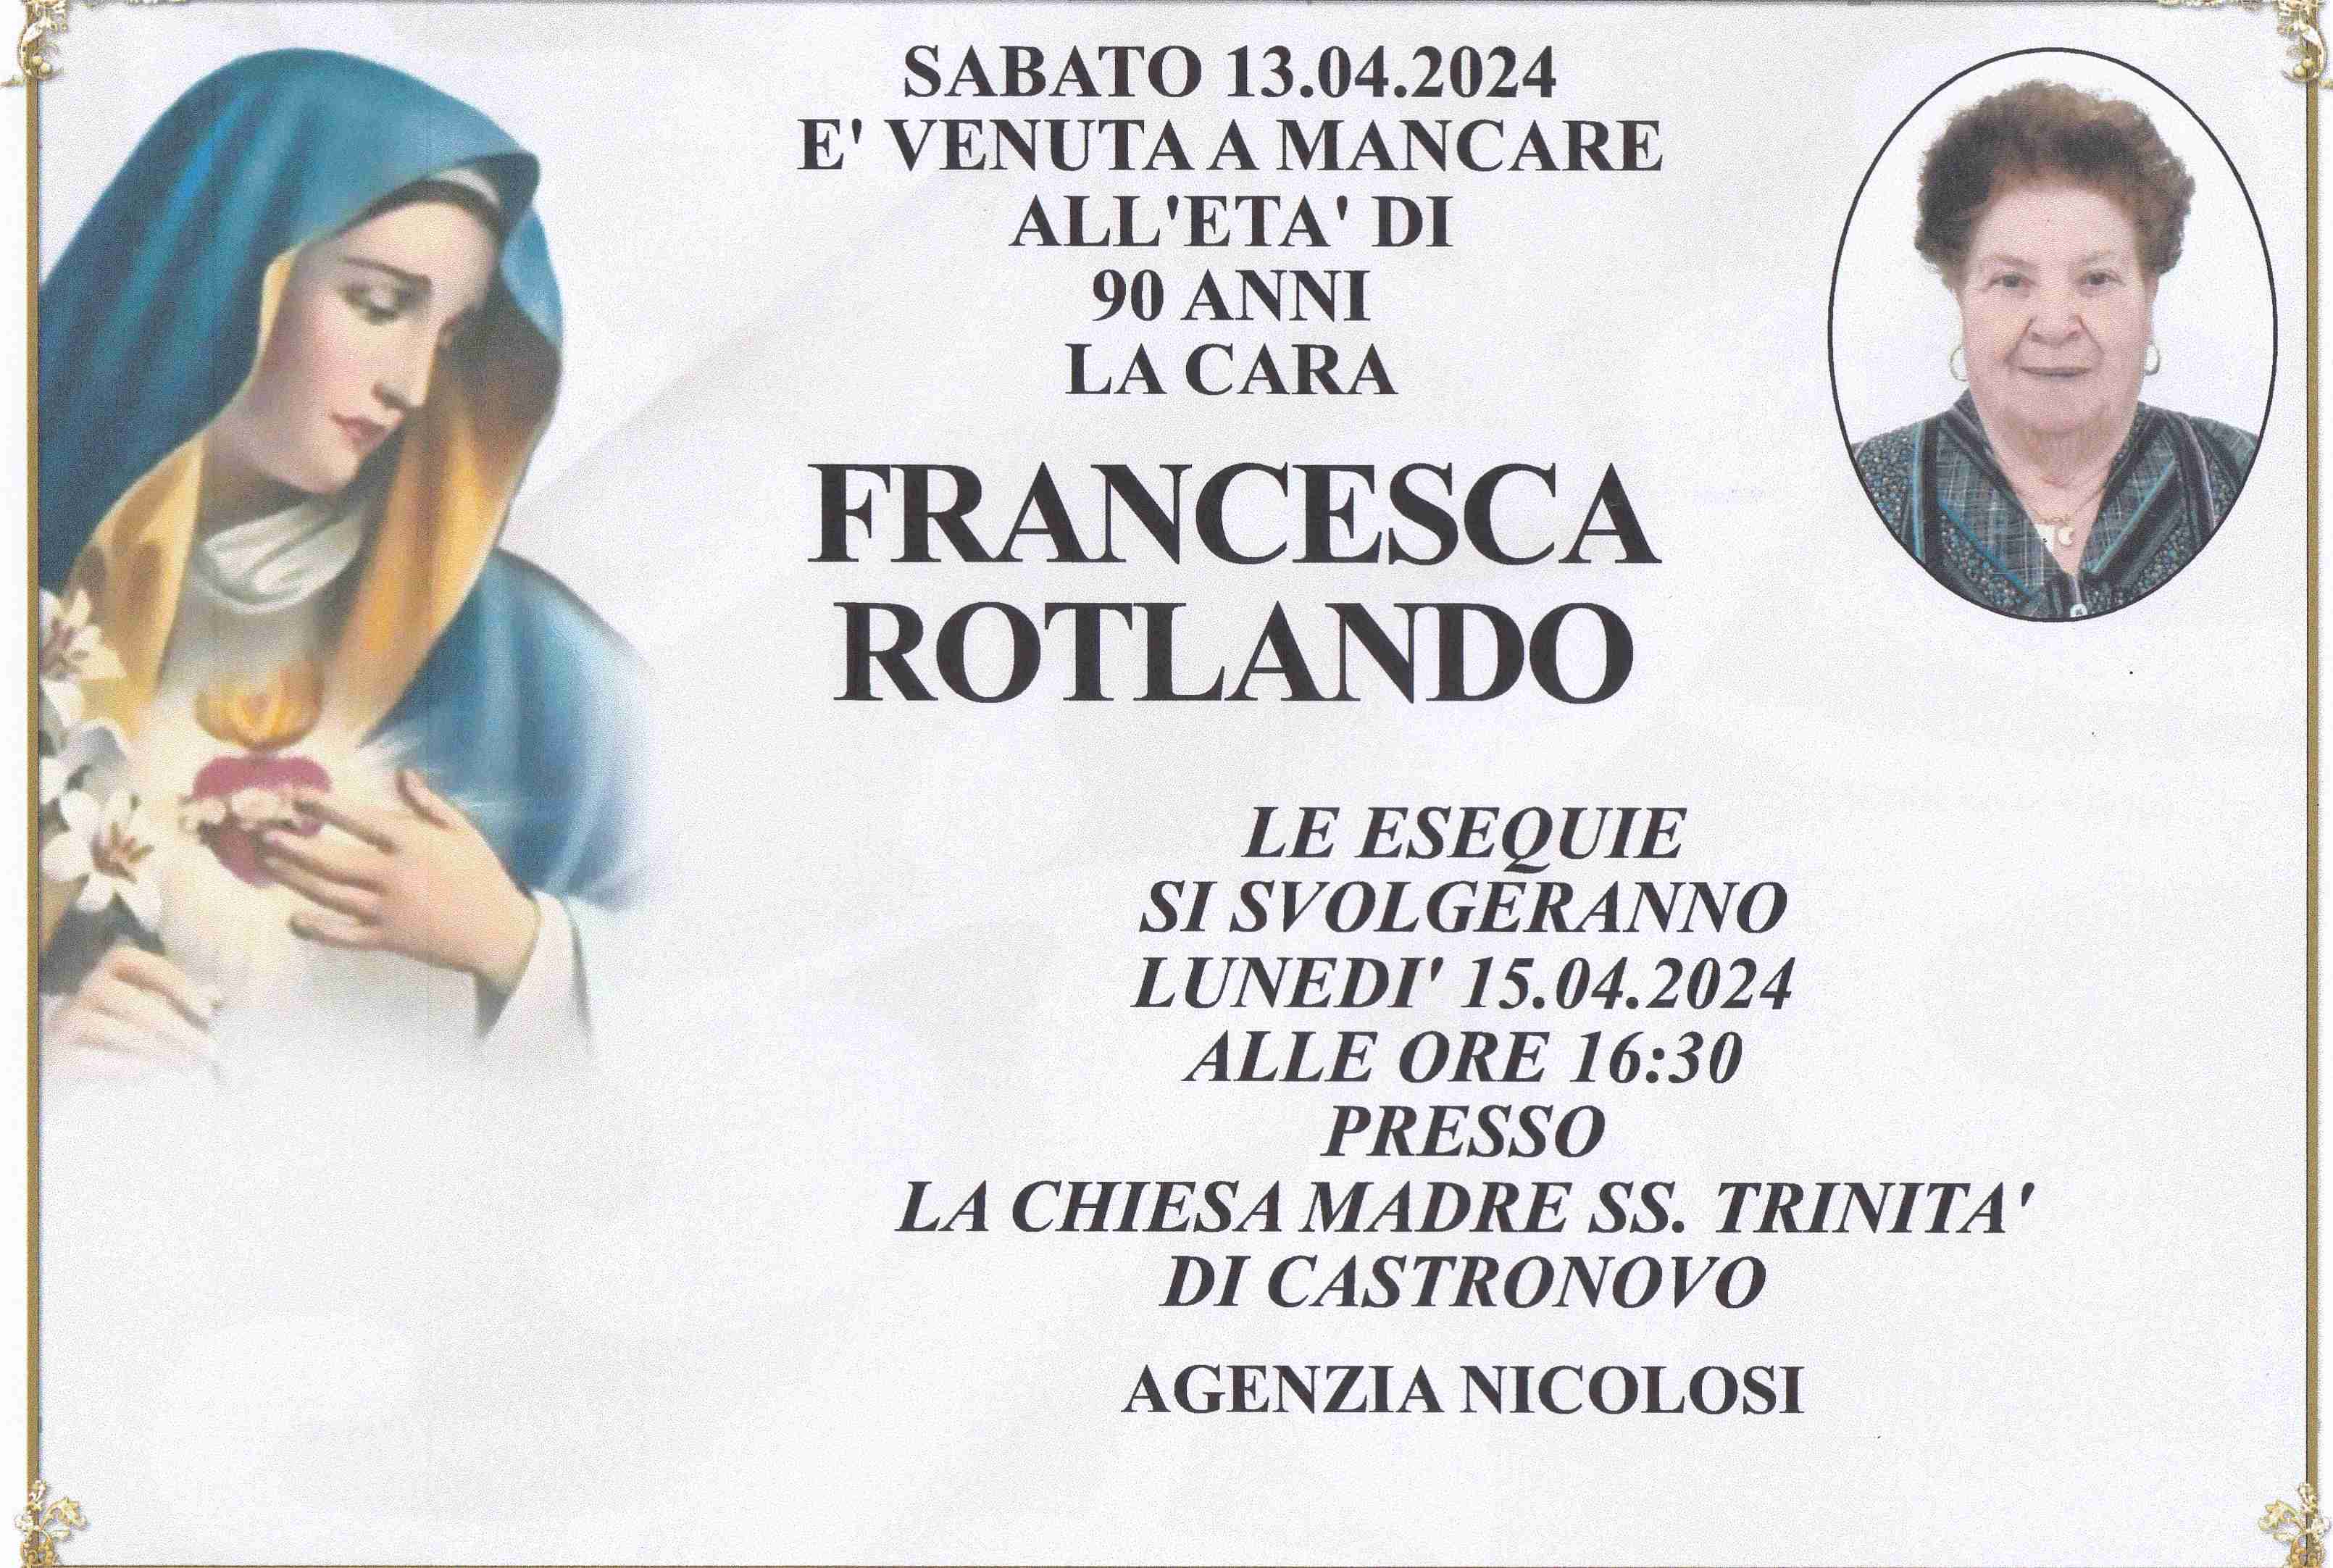 Francesca Rotlando